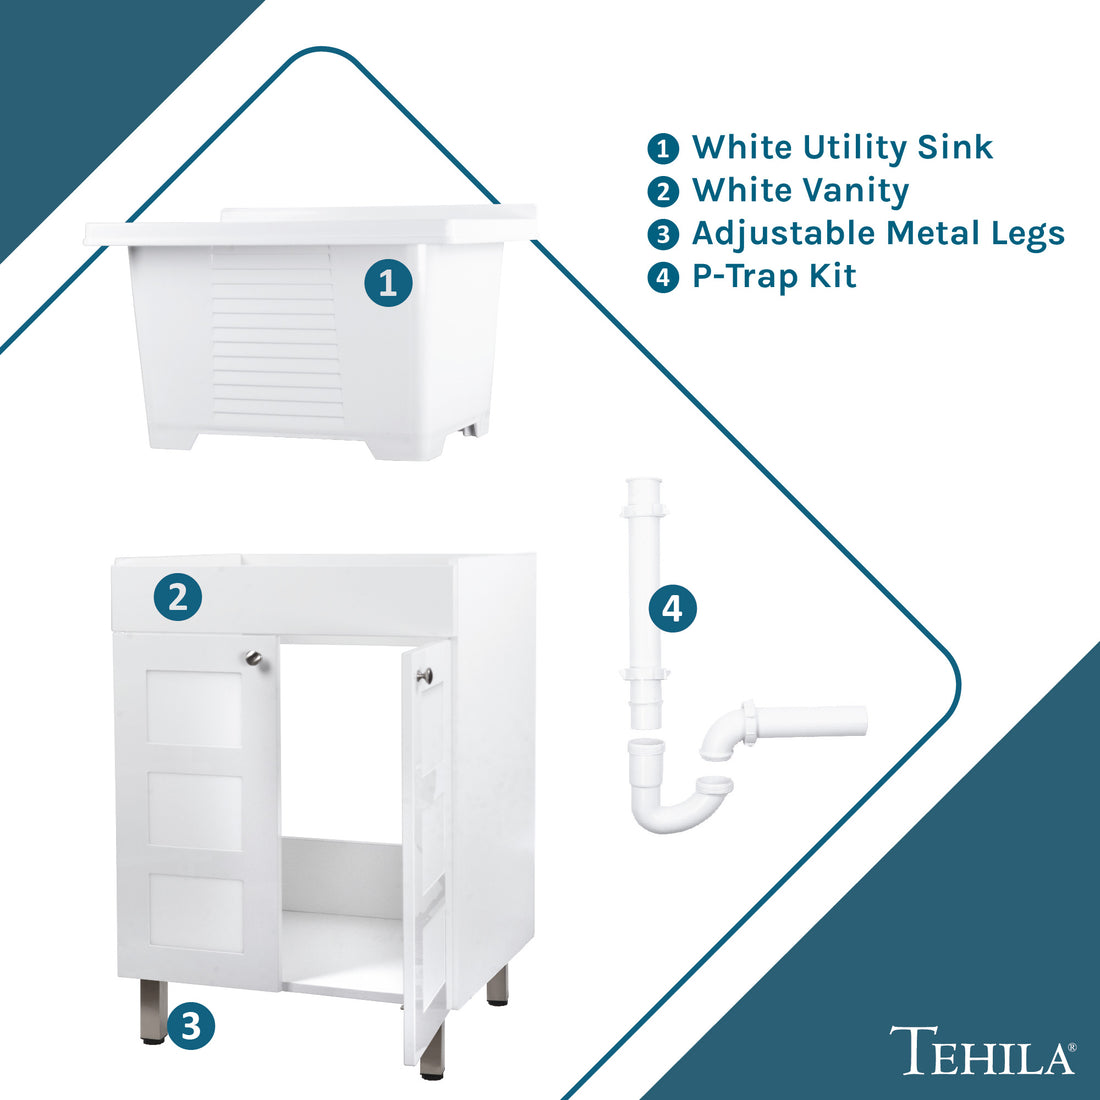 White Utility Sink | White Vanity | Adjustable Metal Legs | P-trap Kit